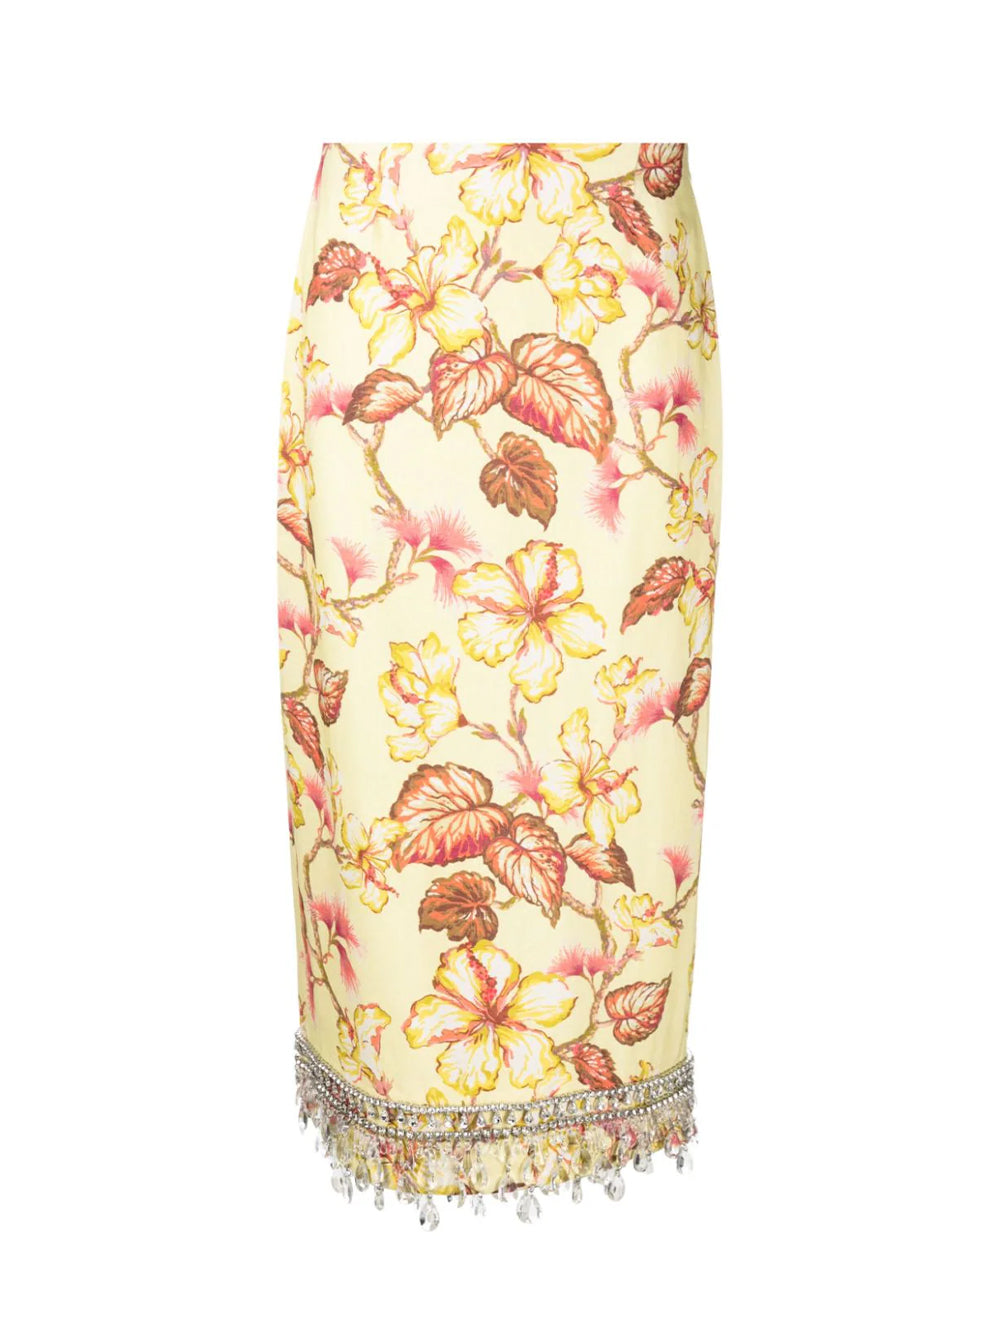 Matchmaker Diamante Skirt (Yellow Hibiscus)